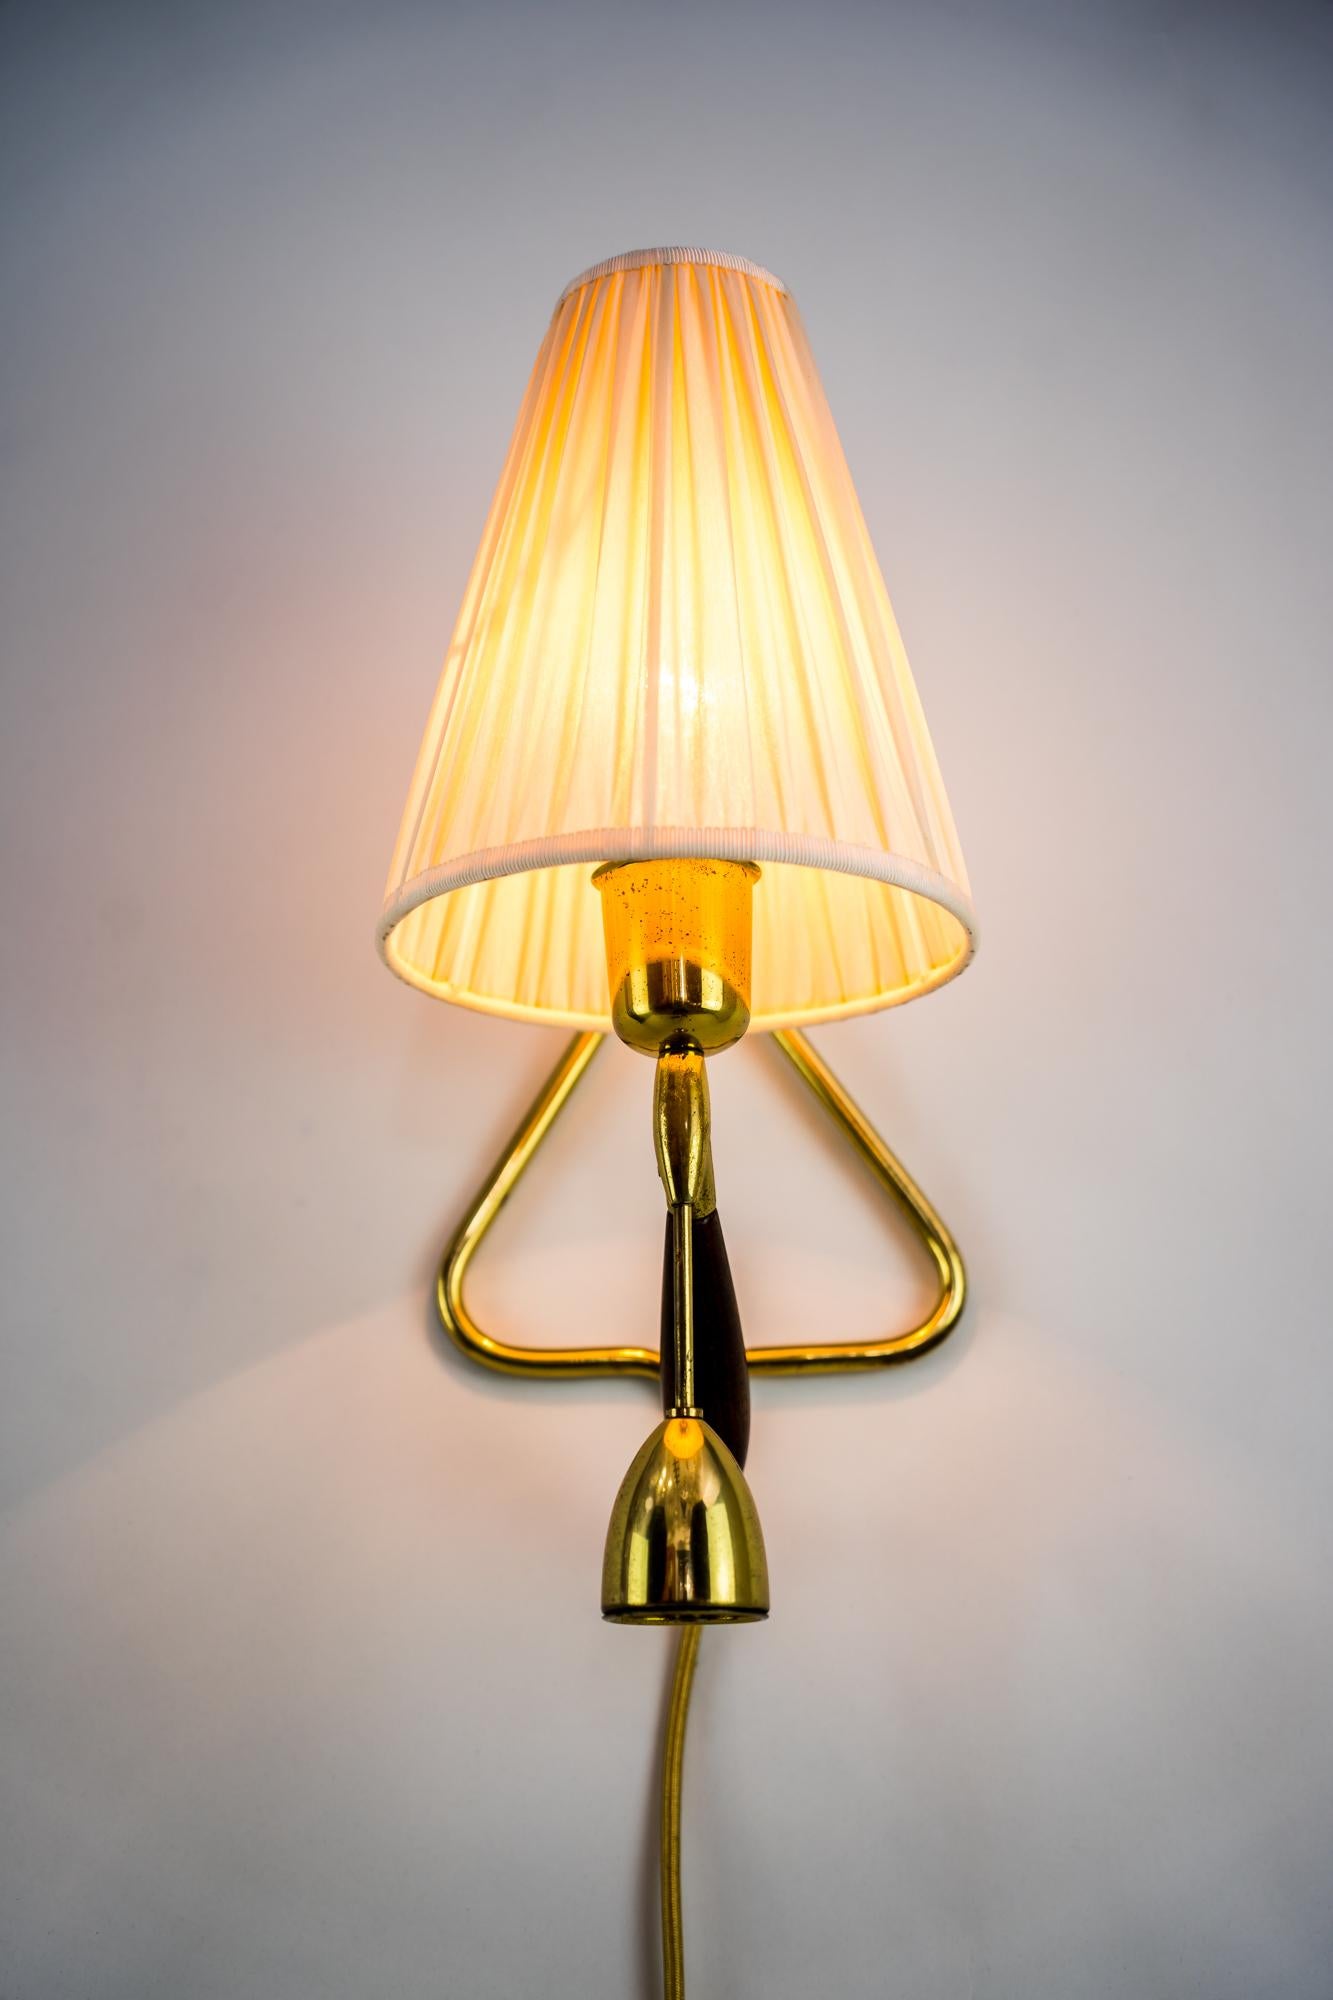 Mid-20th Century Rupert Nikoll Table or Wall Lamp with Original Shade, circa 1950s